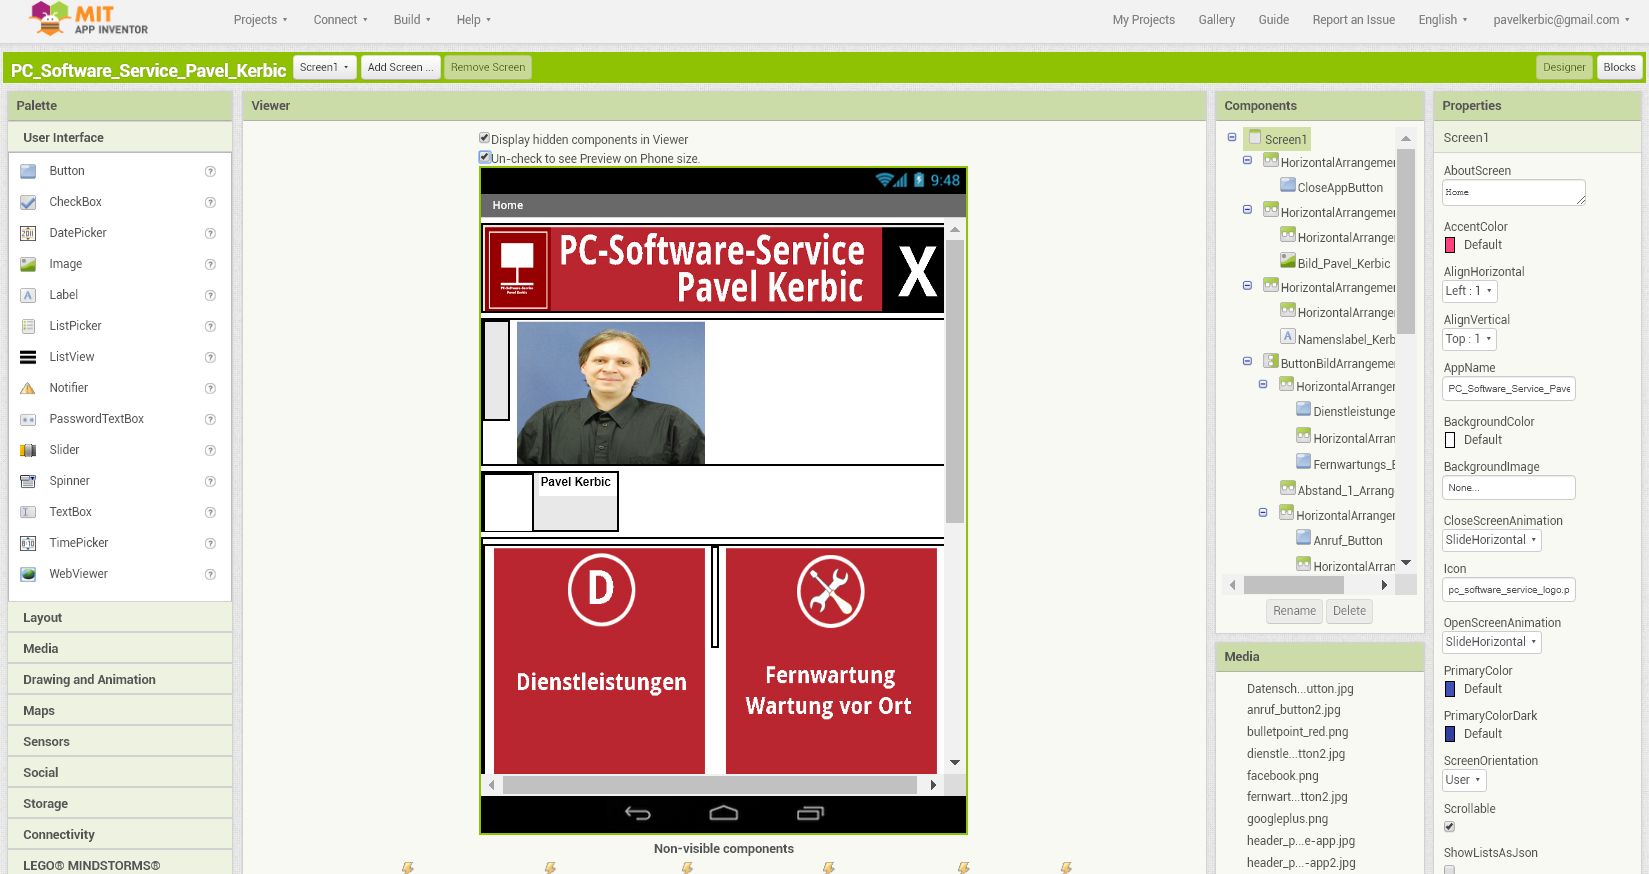 PK-Software-Service Pavel Kerbic - MIT AppInventor